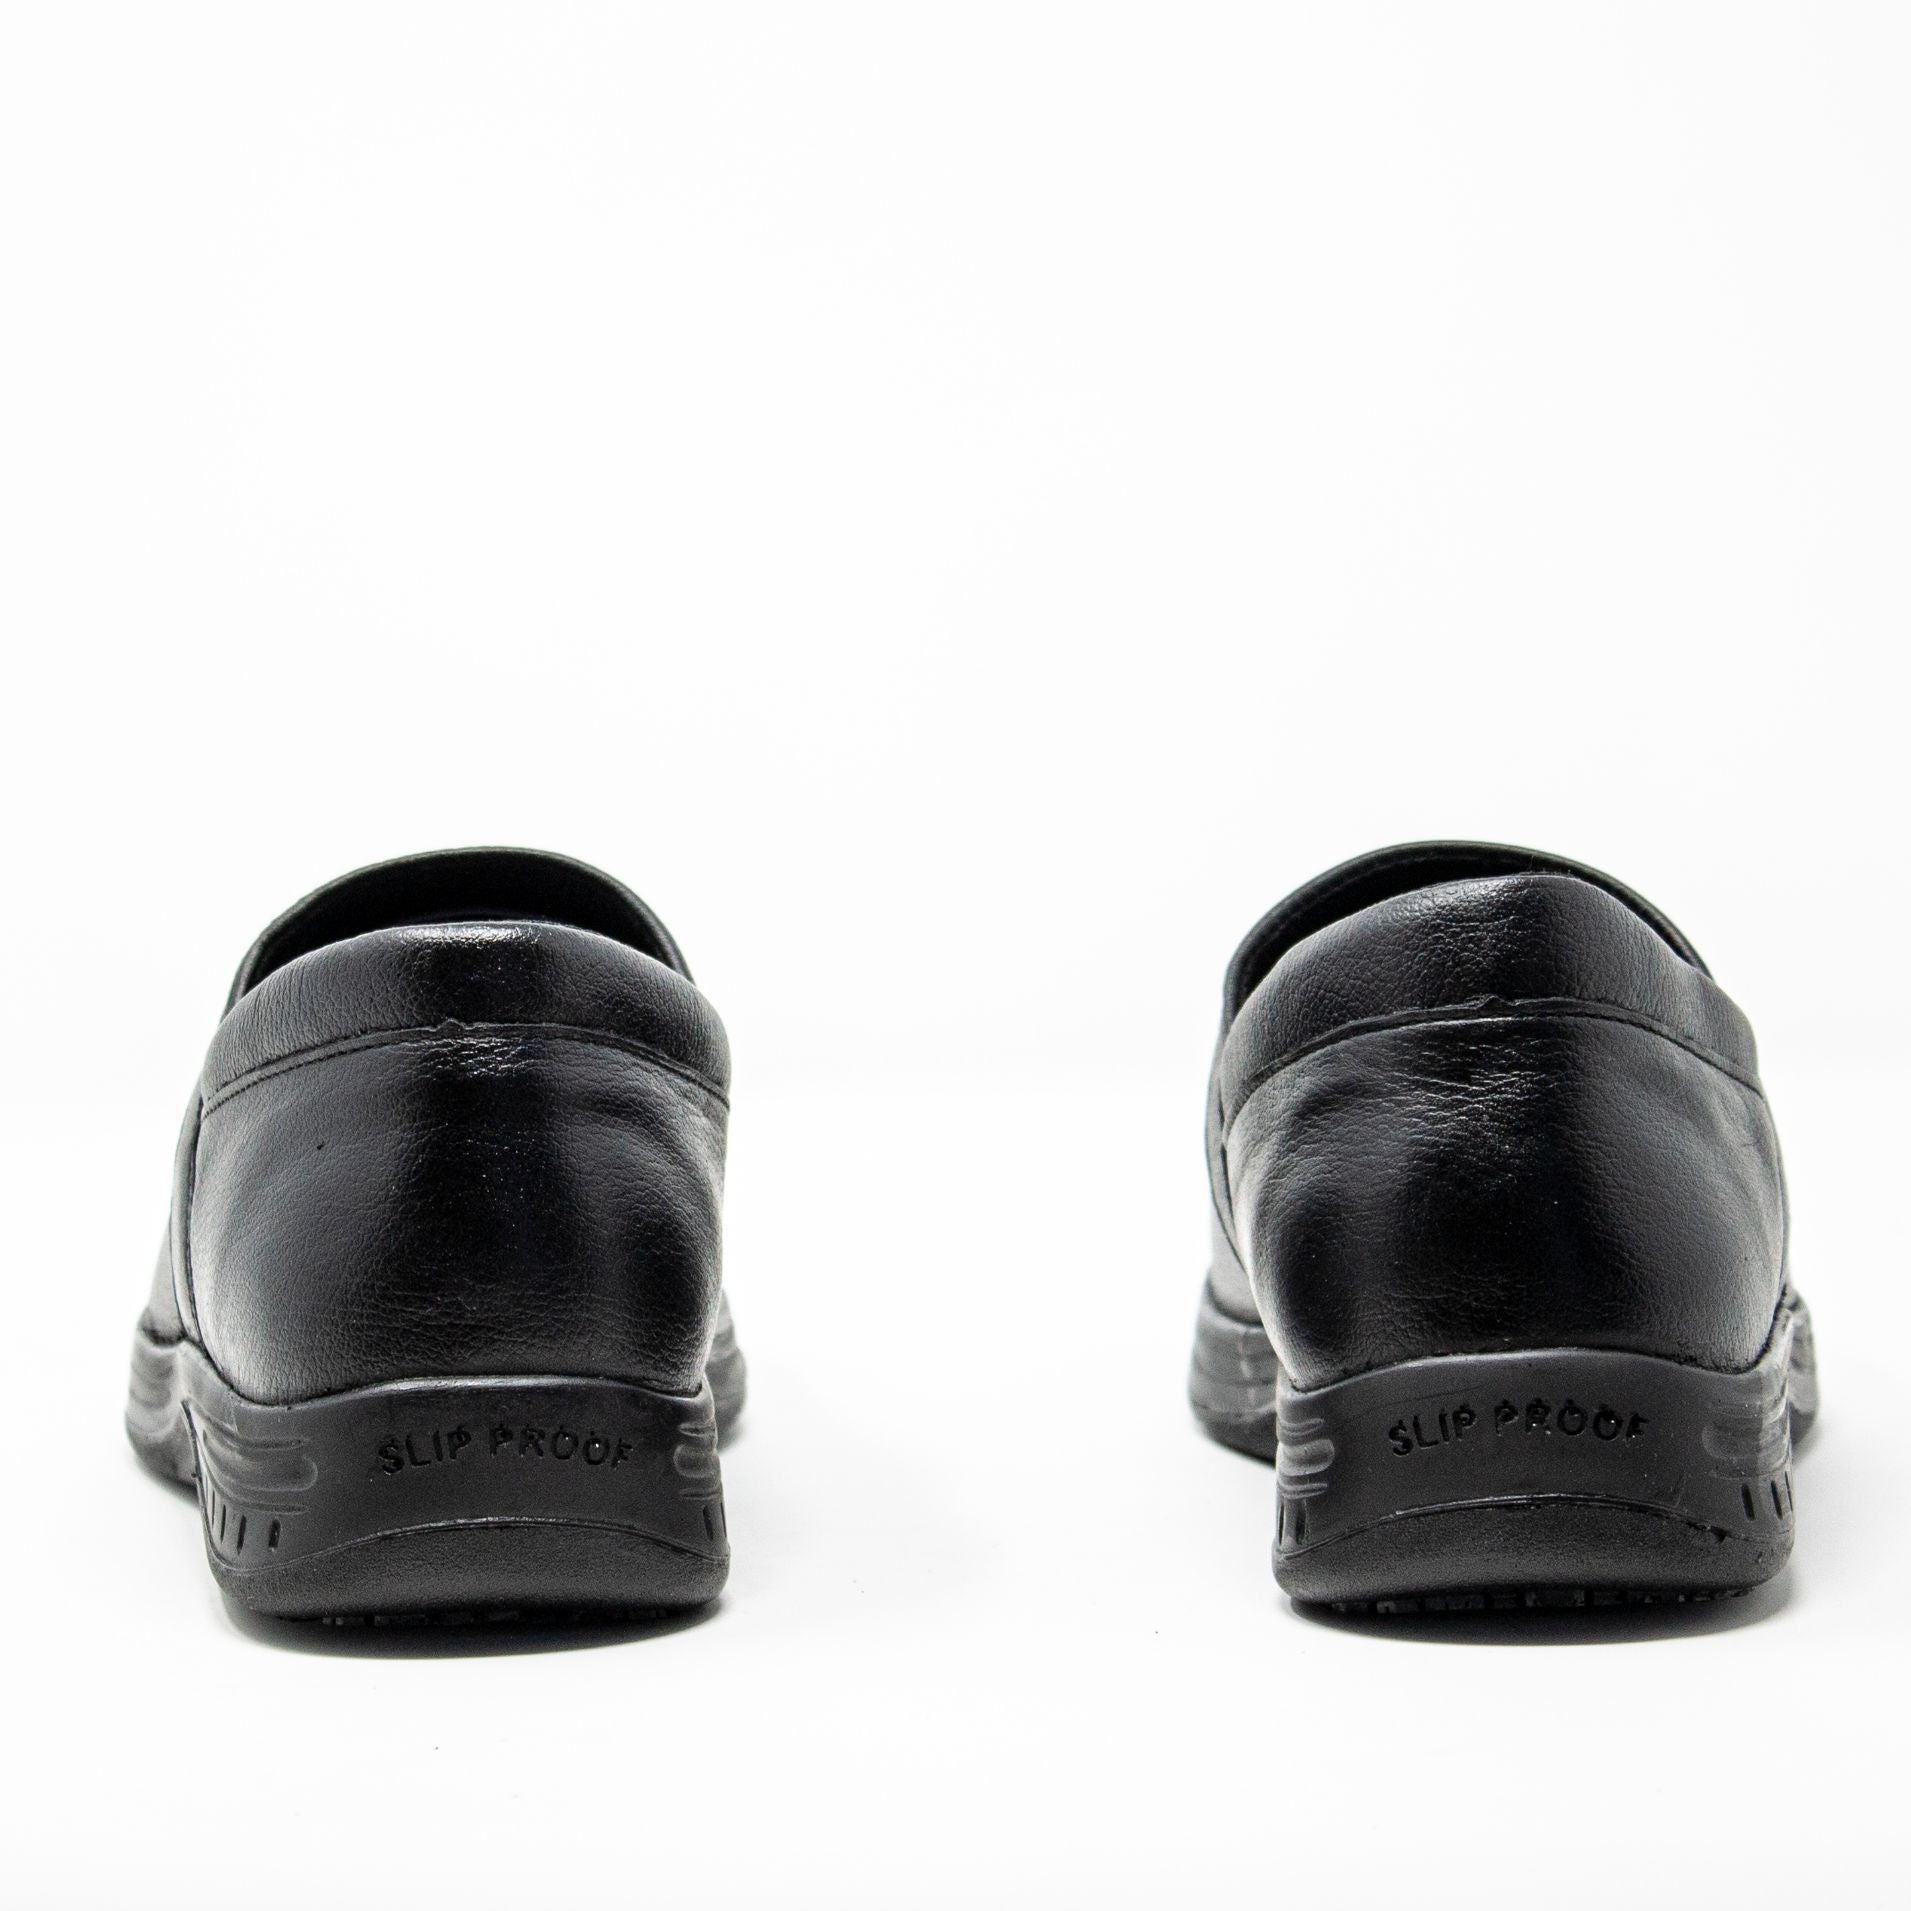 Women's Work Shoes - Non Slip - Black Work Shoes - Fortal - Slip On Work Shoes - Negro Slip On Shoes